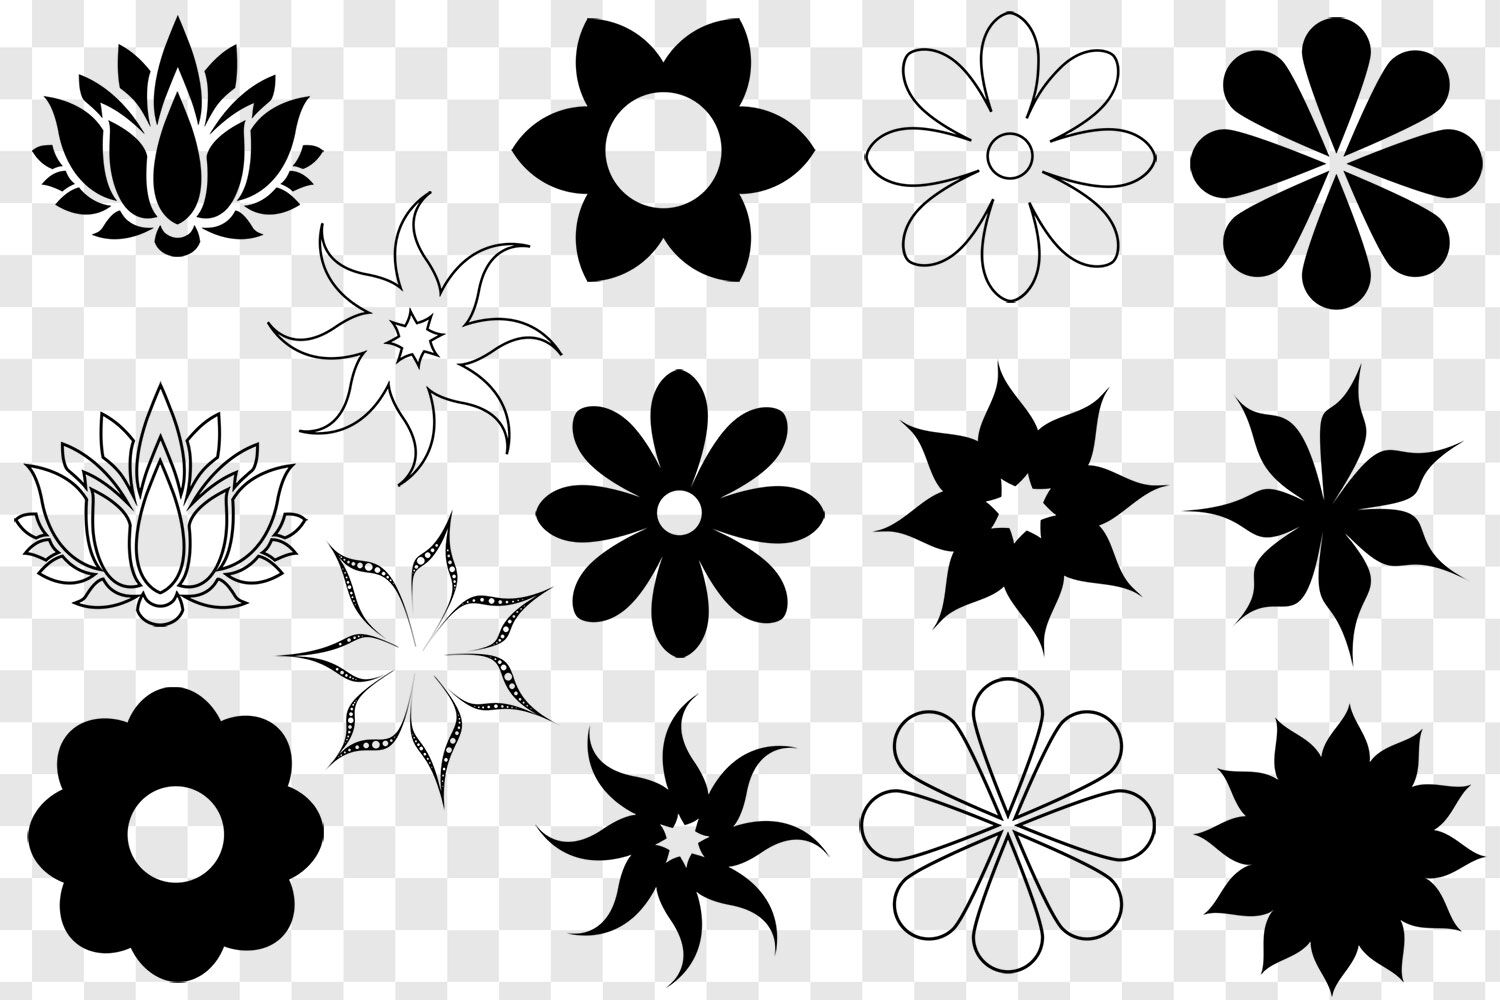 Flower SVG Bundle - Flower Clip Art - Flower Silhouette Cut Files By